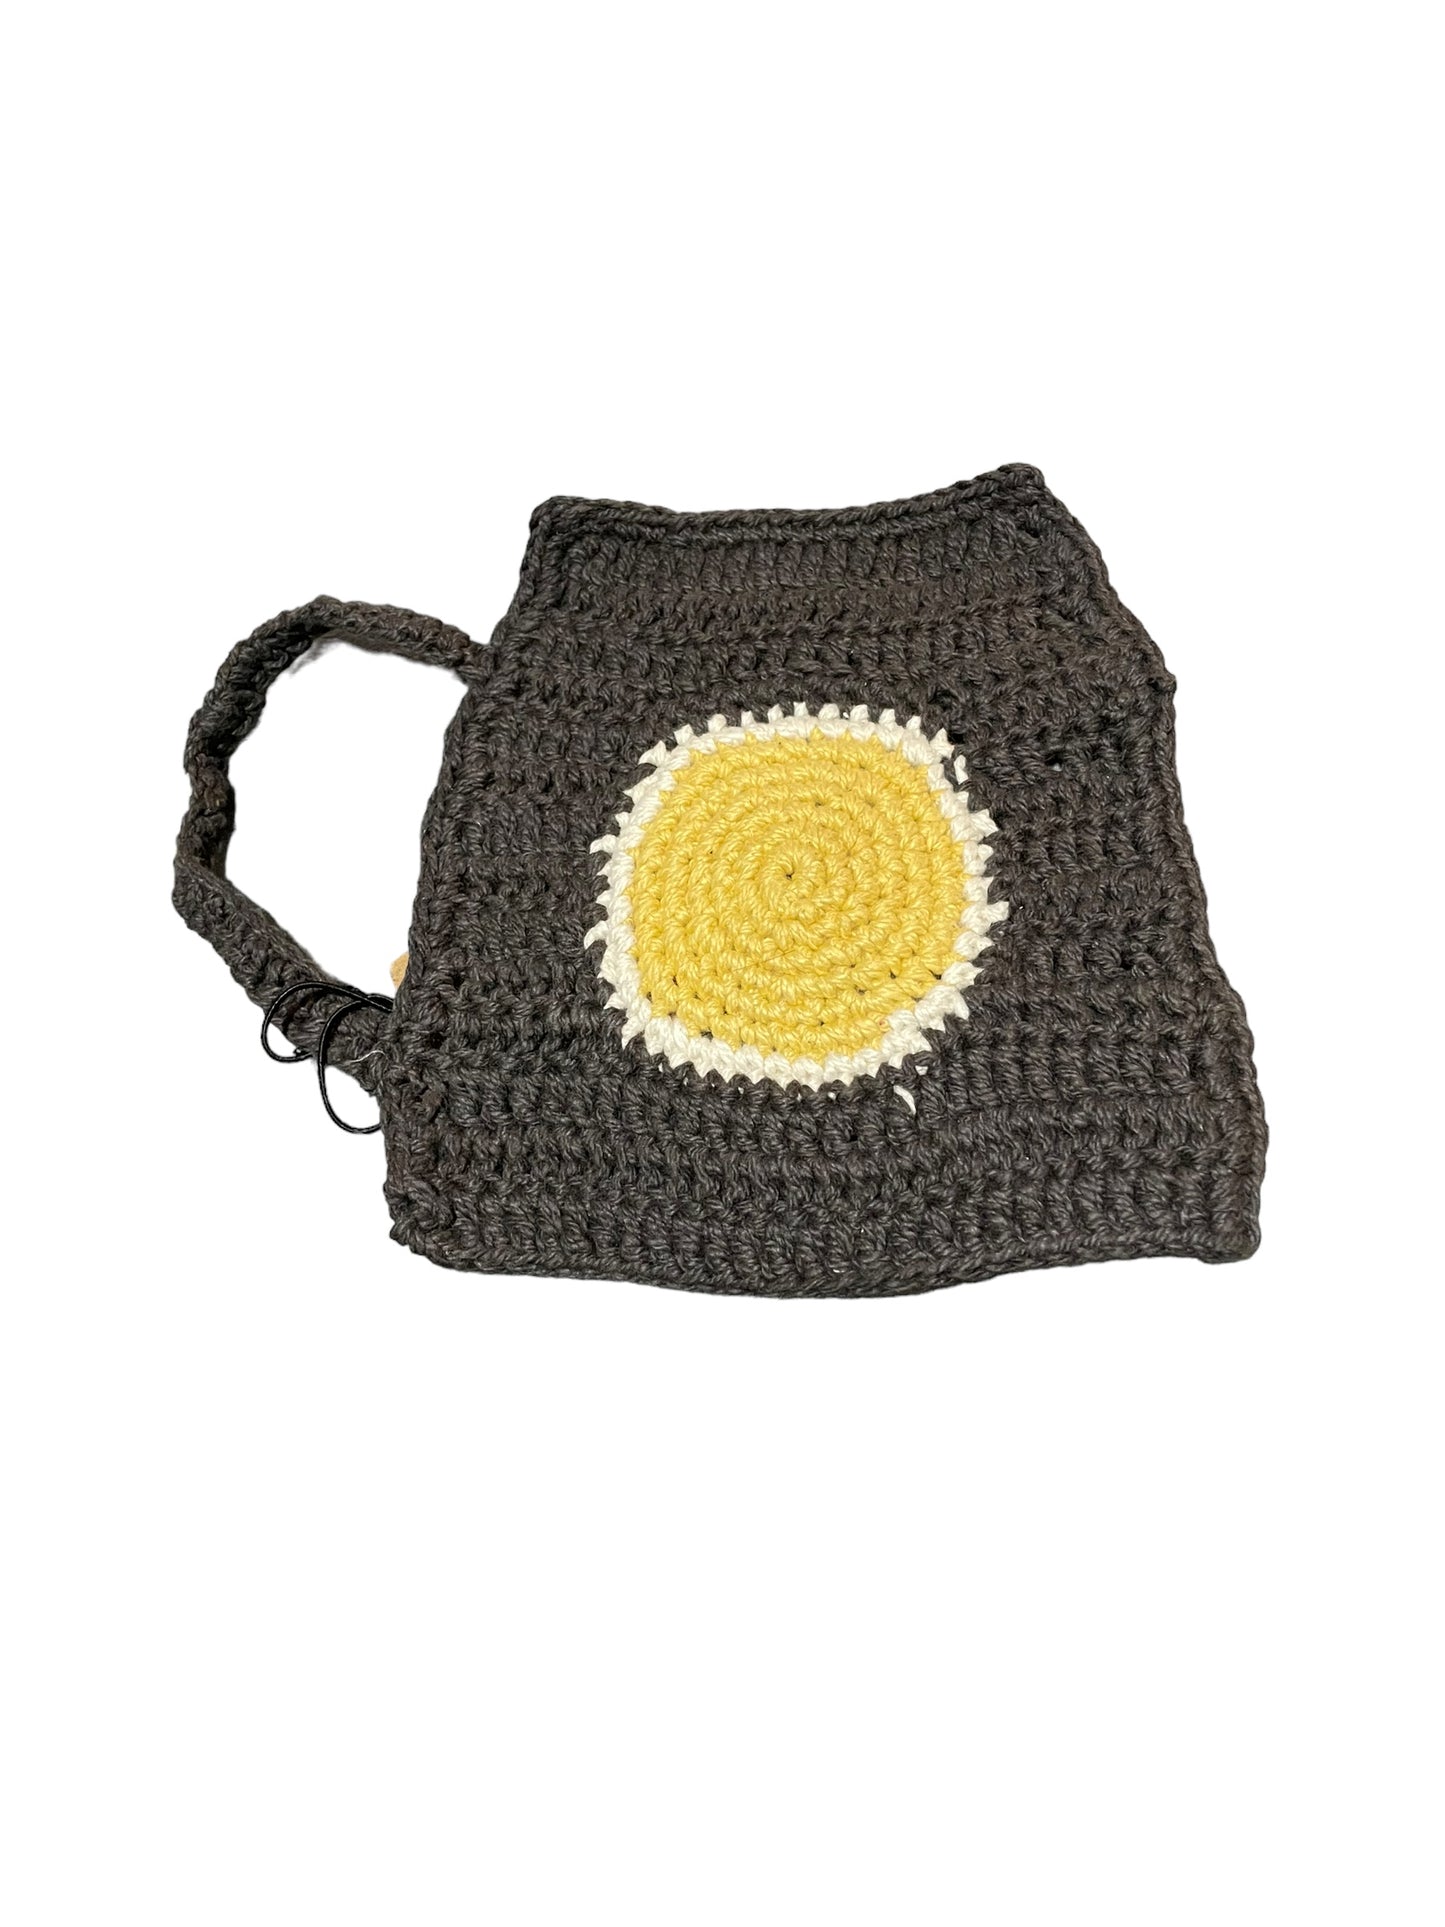 Cotton Crocheted Mug Shaped Coaster/Trivet, 4 Styles